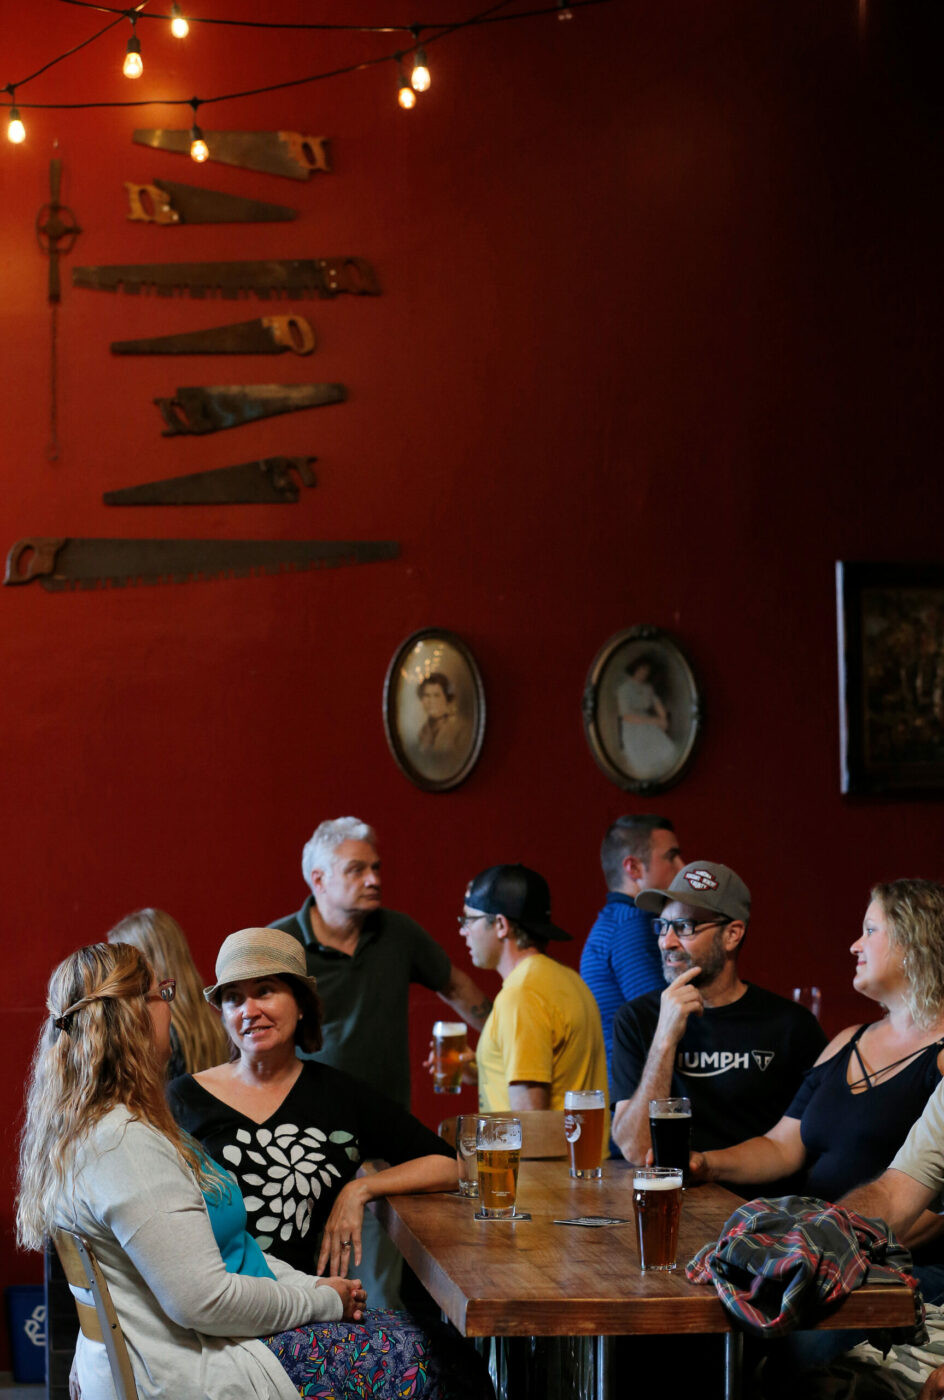 Customers enjoy craft brews, conversation and live music at Moonlight Brewing Company in Santa Rosa, California, on Thursday, July 18, 2019. (Alvin Jornada / The Press Democrat)